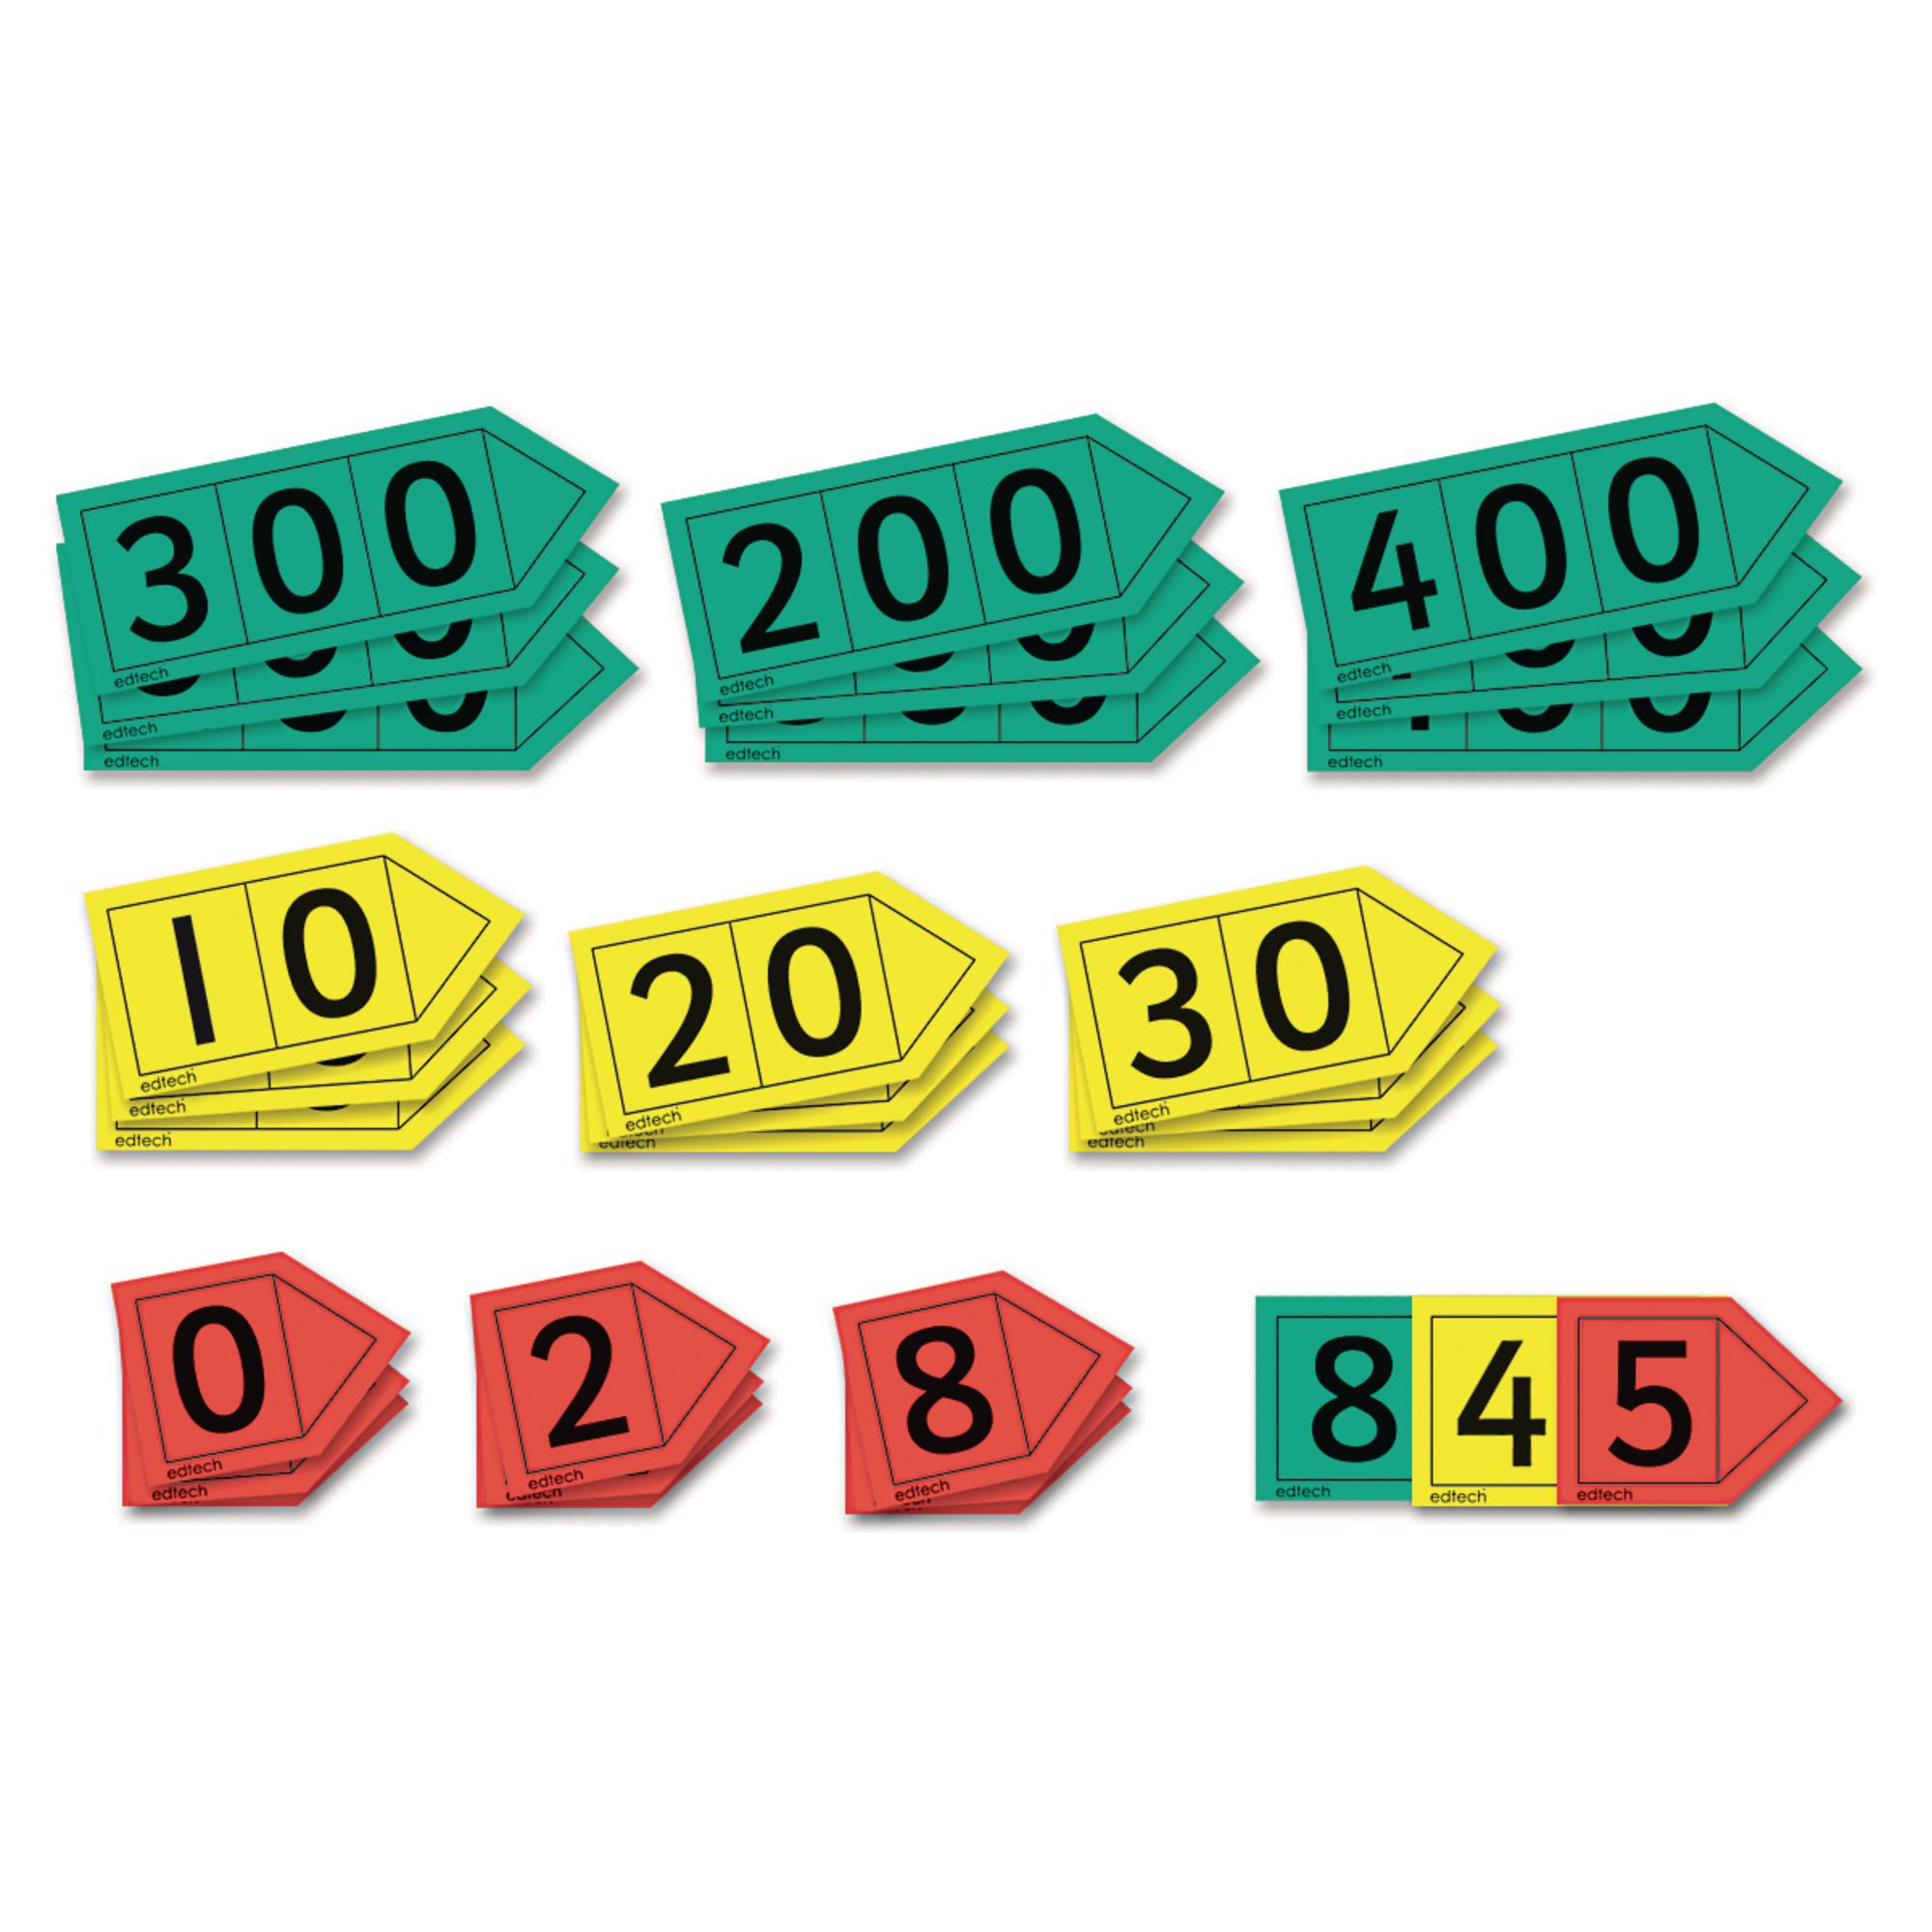 He1002791 - Place Value Arrow Cards - Pupil | Hope Education - Free Place Value Arrow Cards Printable